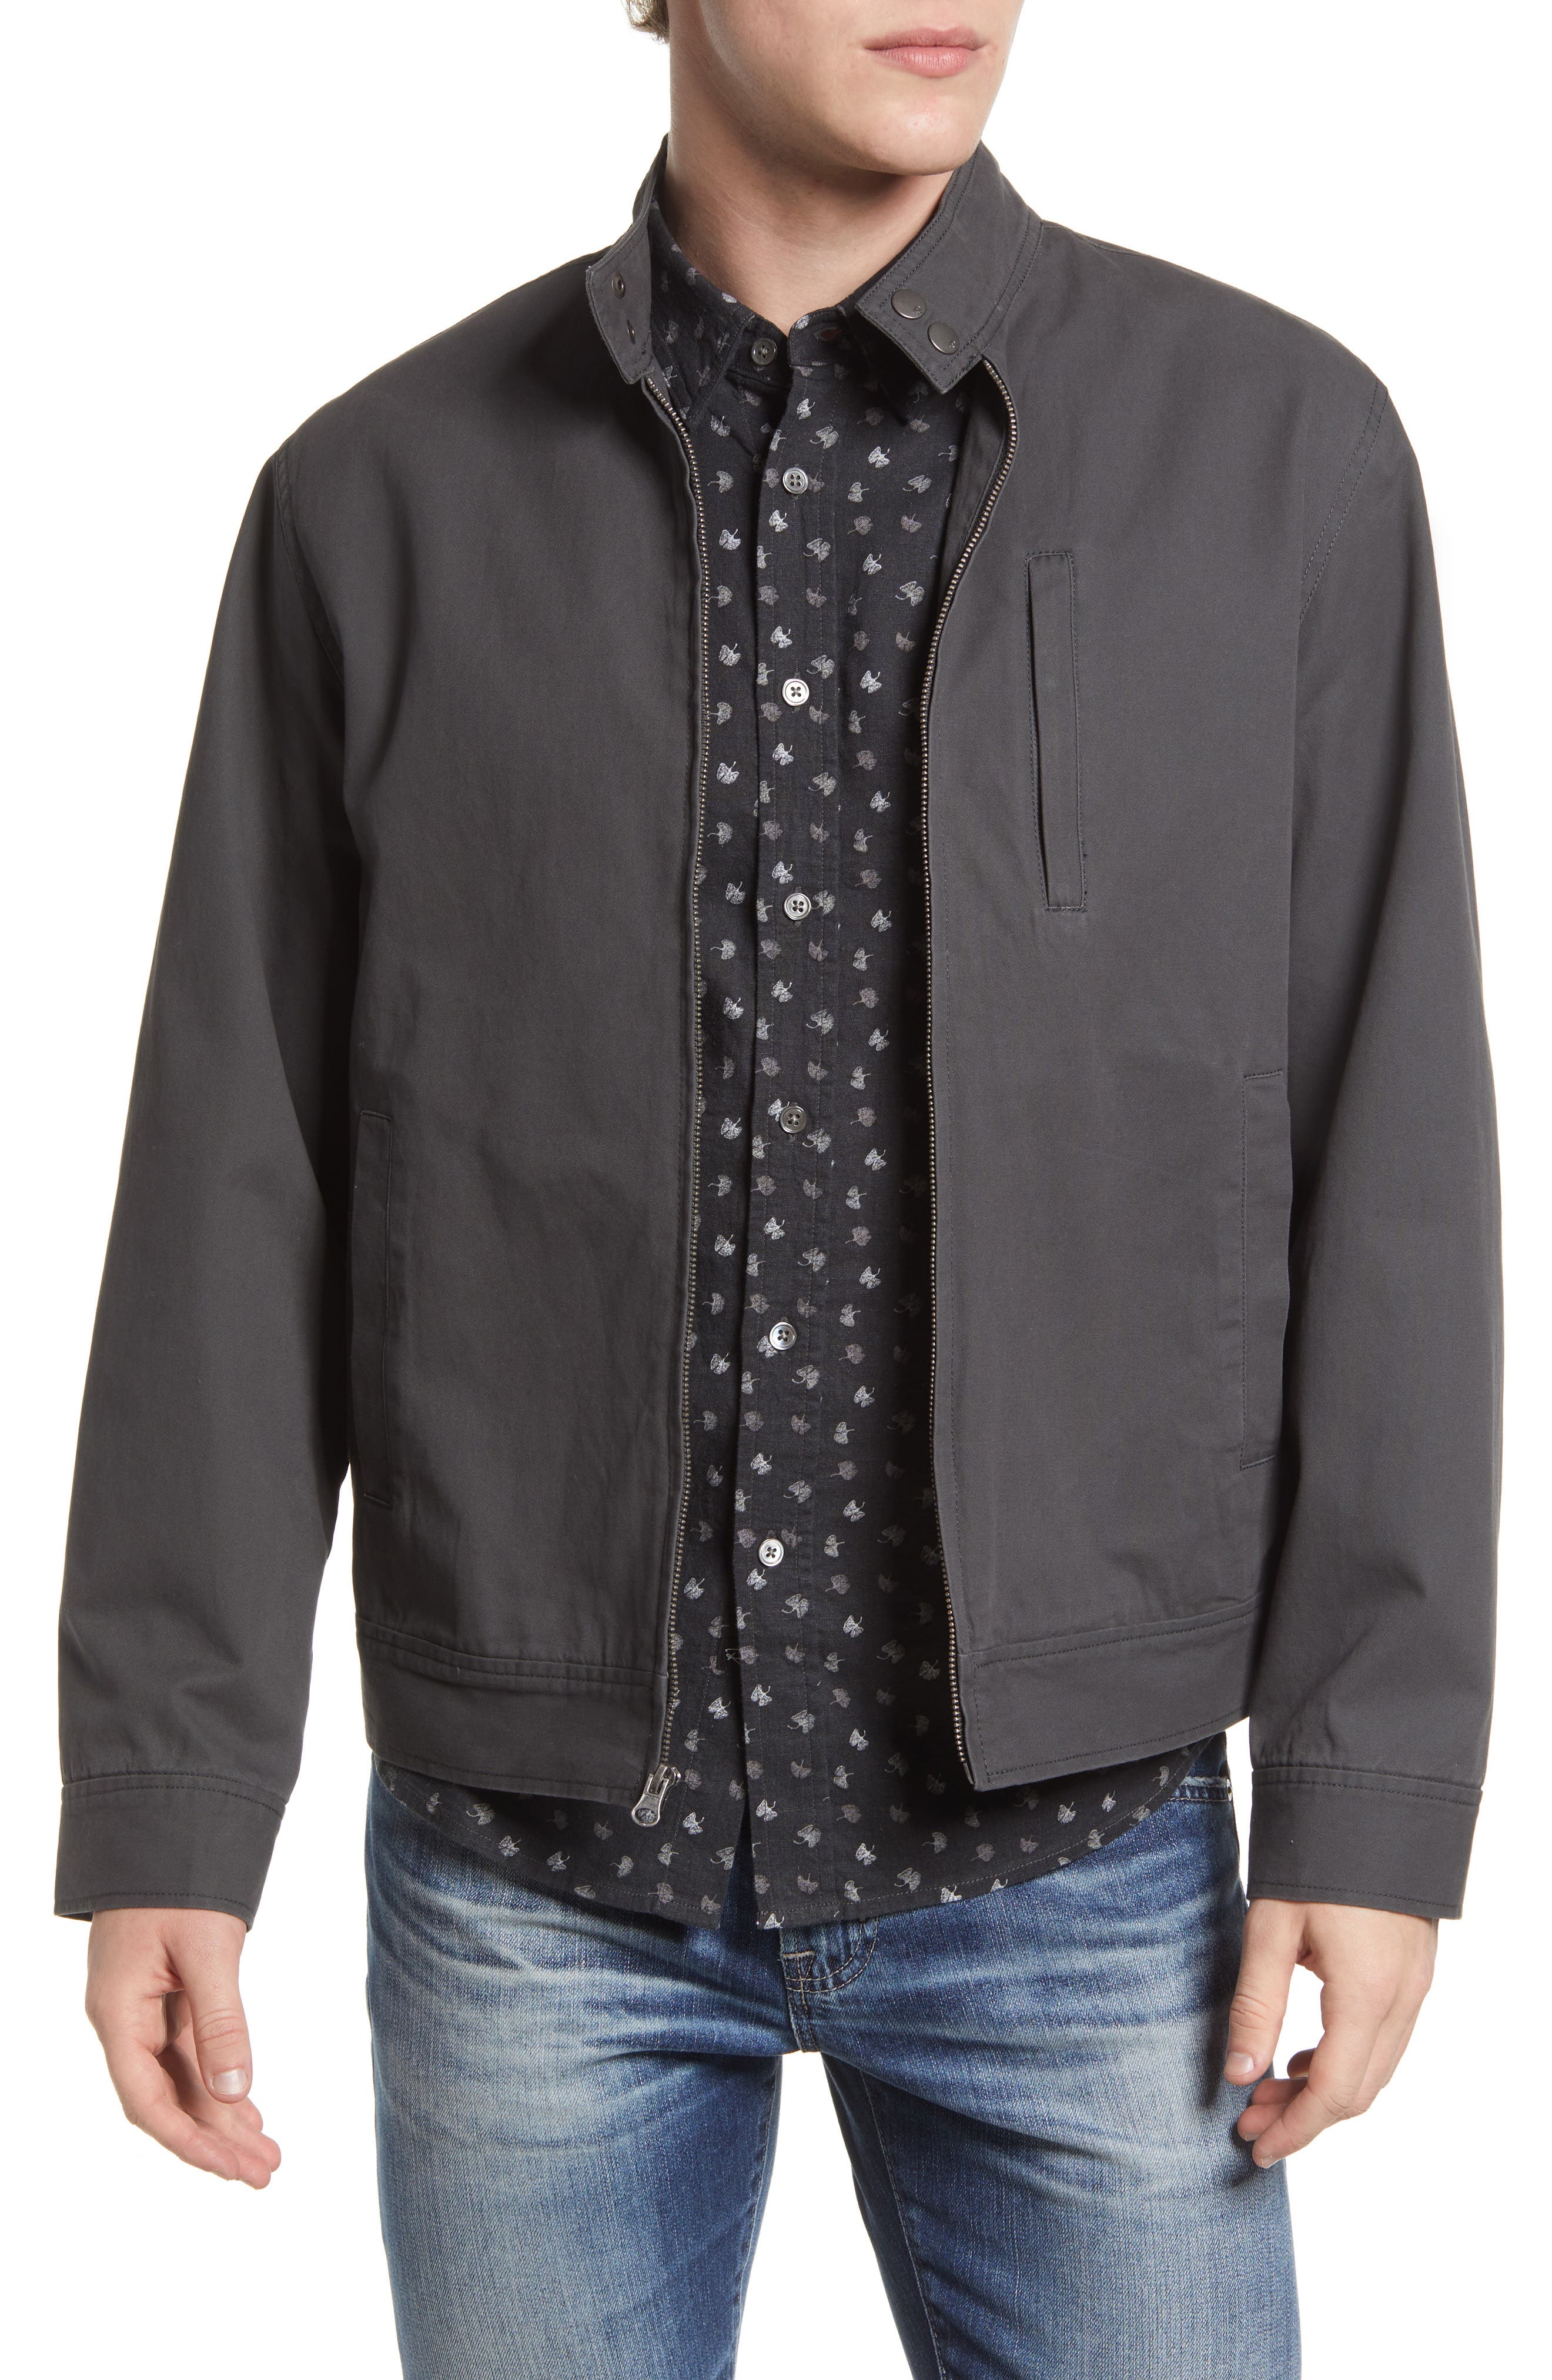 Size 42R 100% Cotton REDUCED PRICE Stone BRAND NEW Oakman Cotton Jacket 